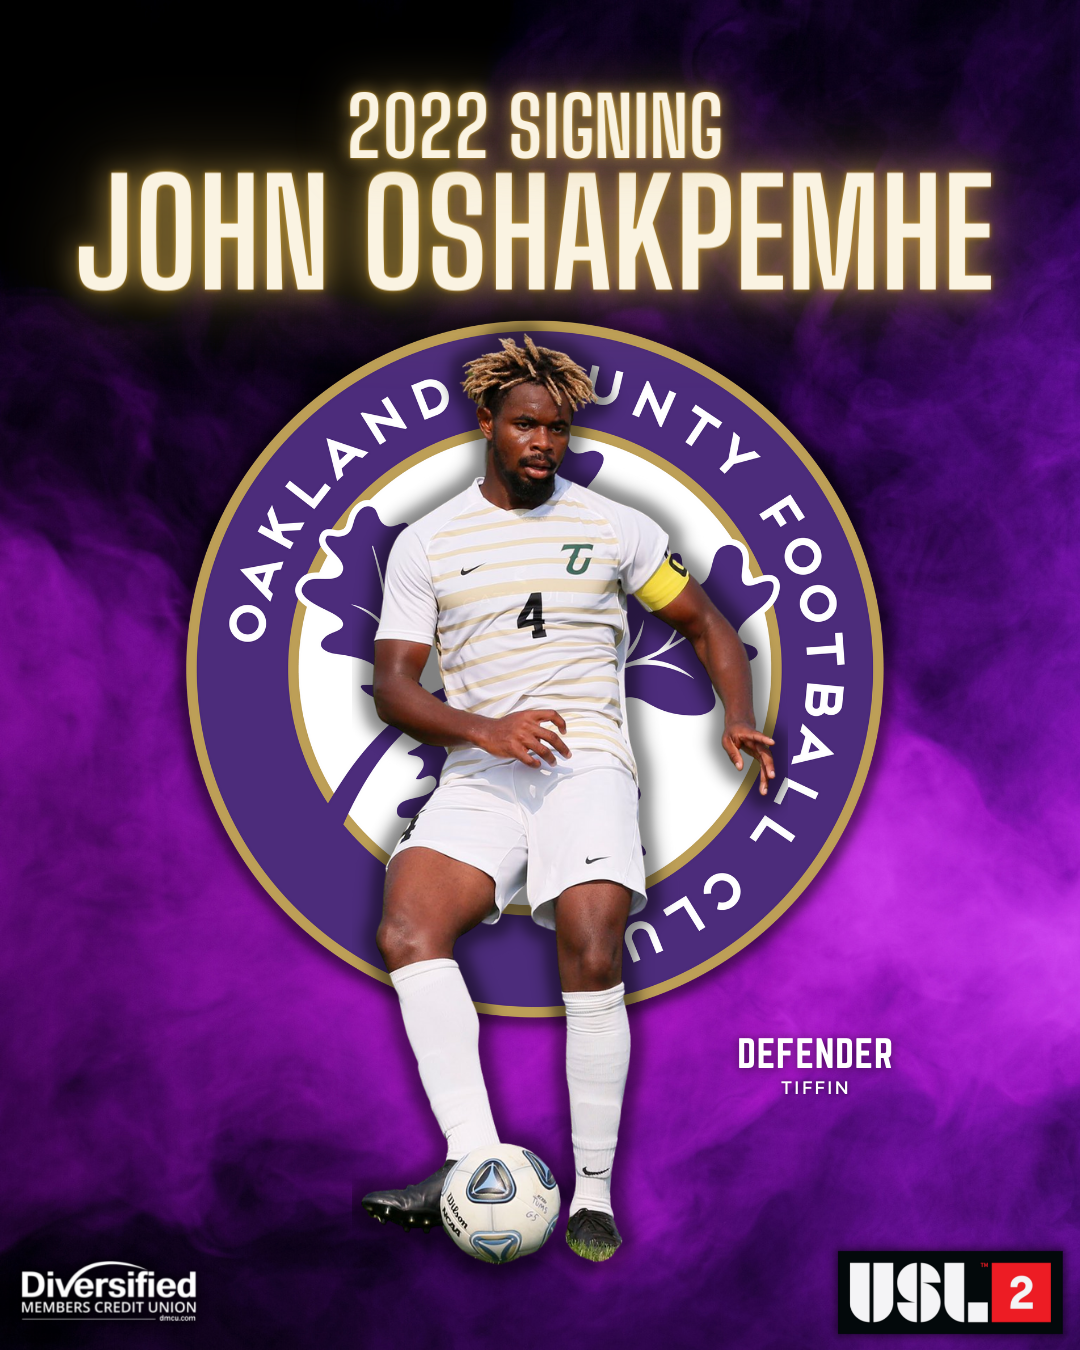 John Oshakpemhe